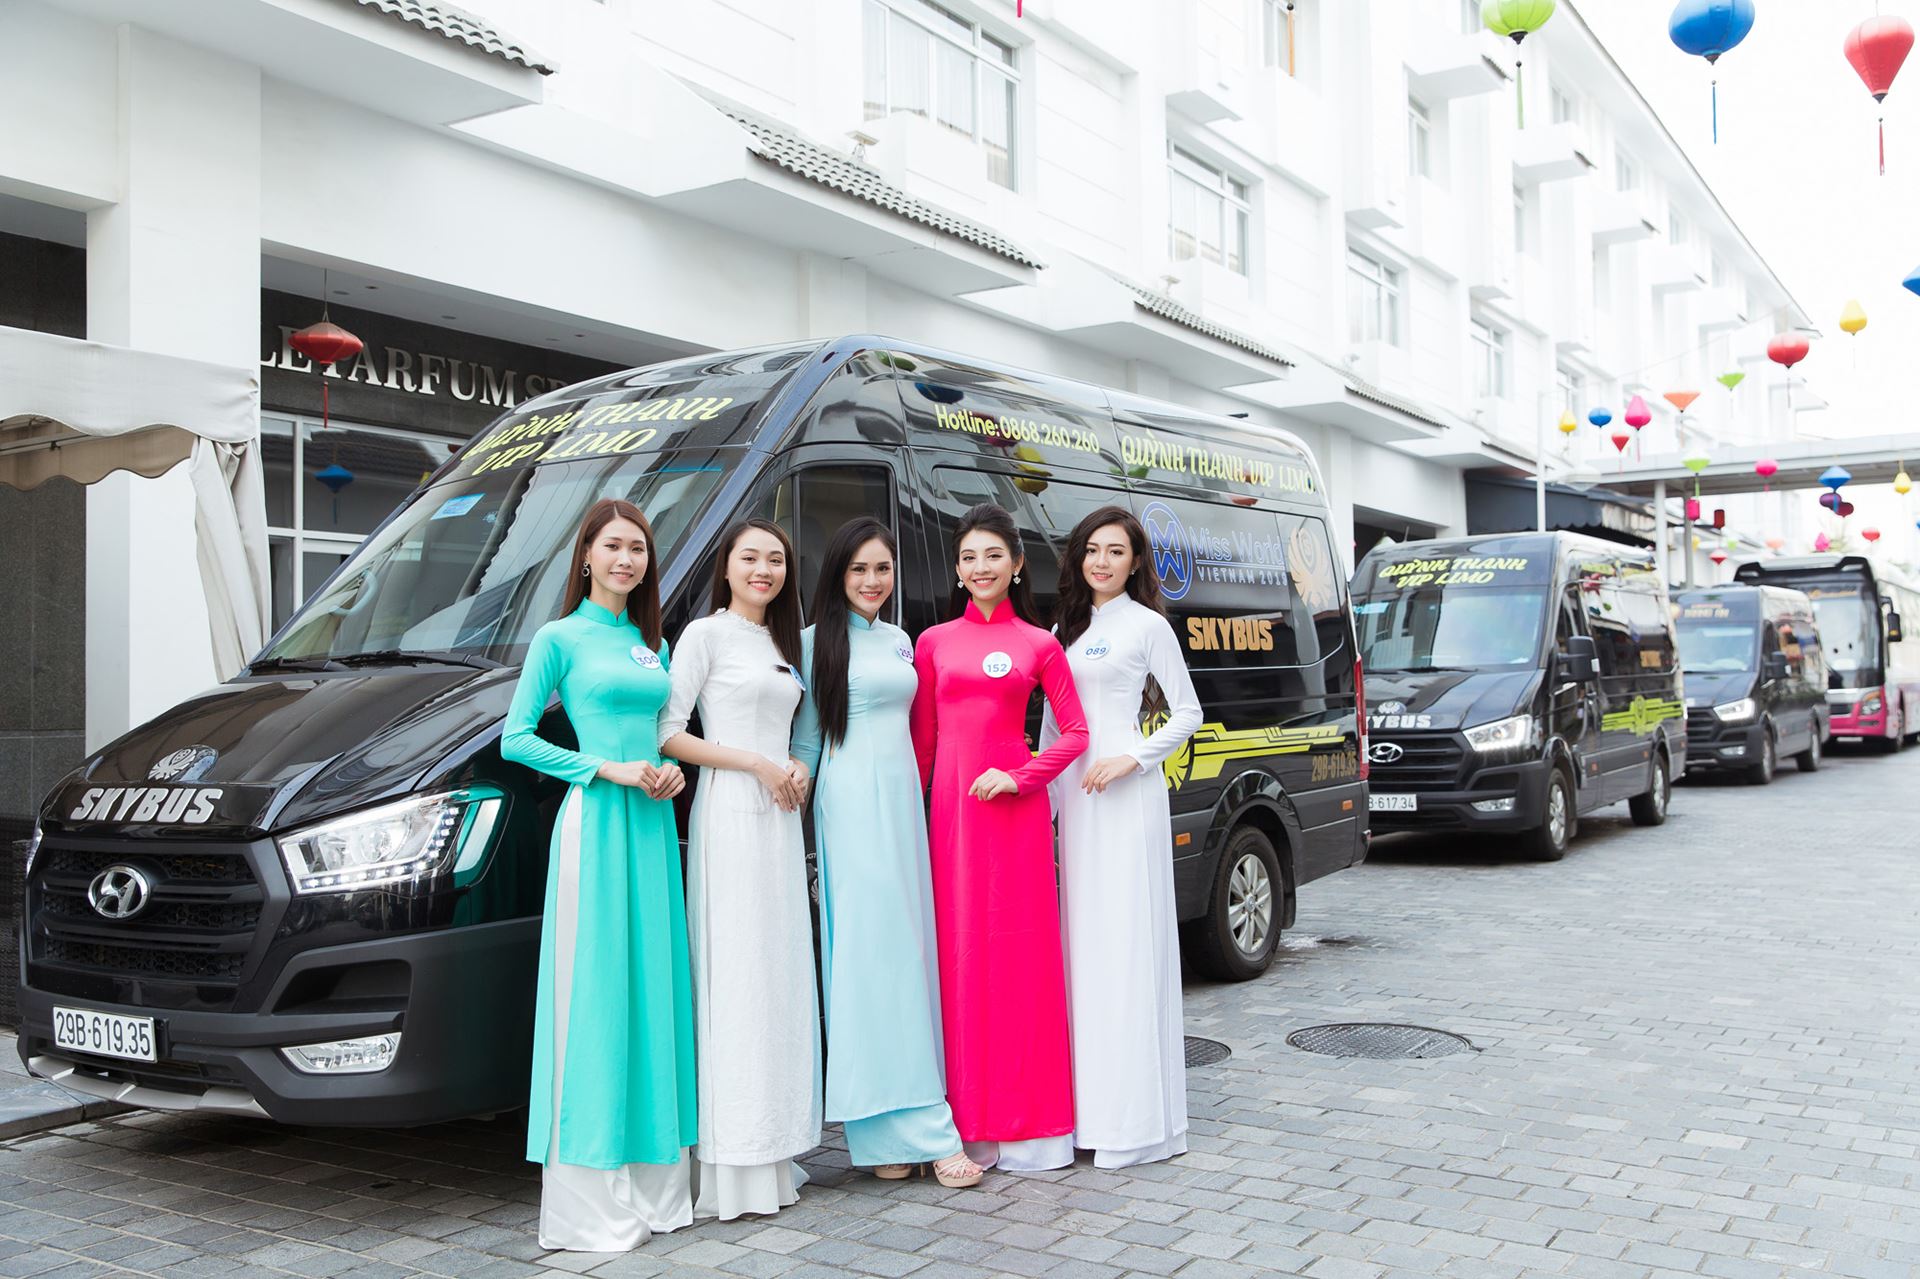 xe limousine Skybus & Miss World Vietnam 2019 - 9